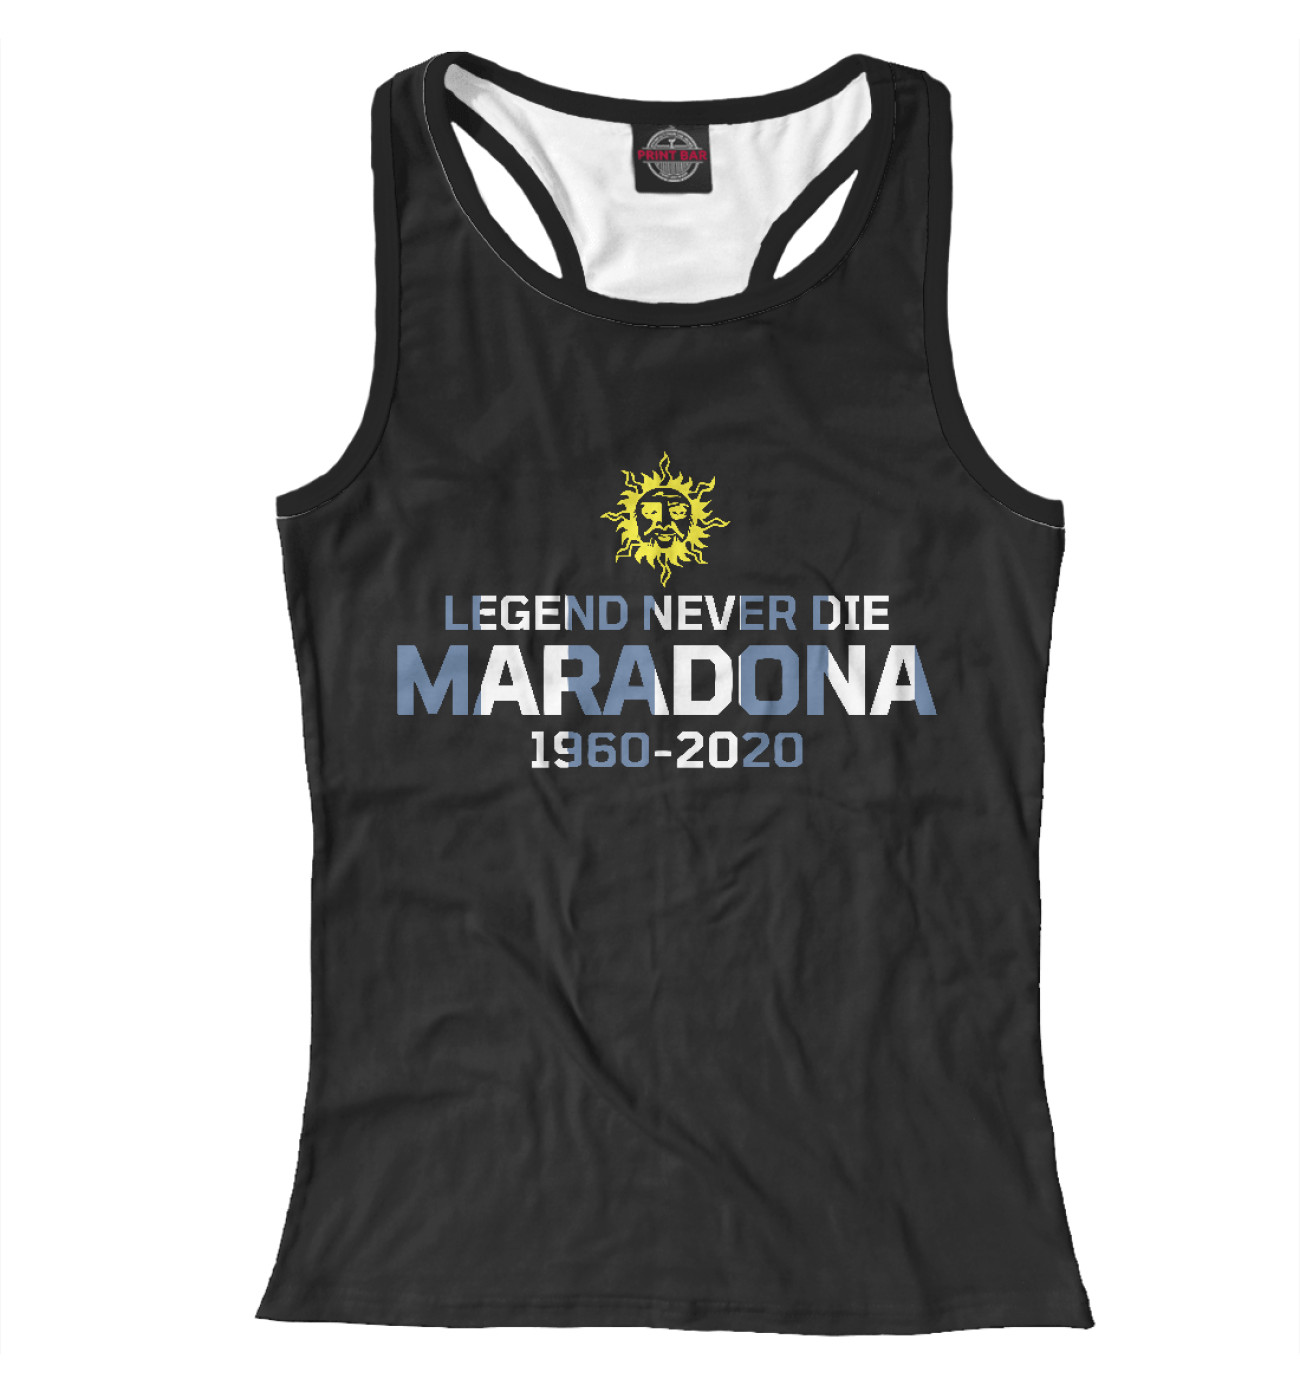 Женская Борцовка Maradona, артикул: FLT-676440-mayb-1